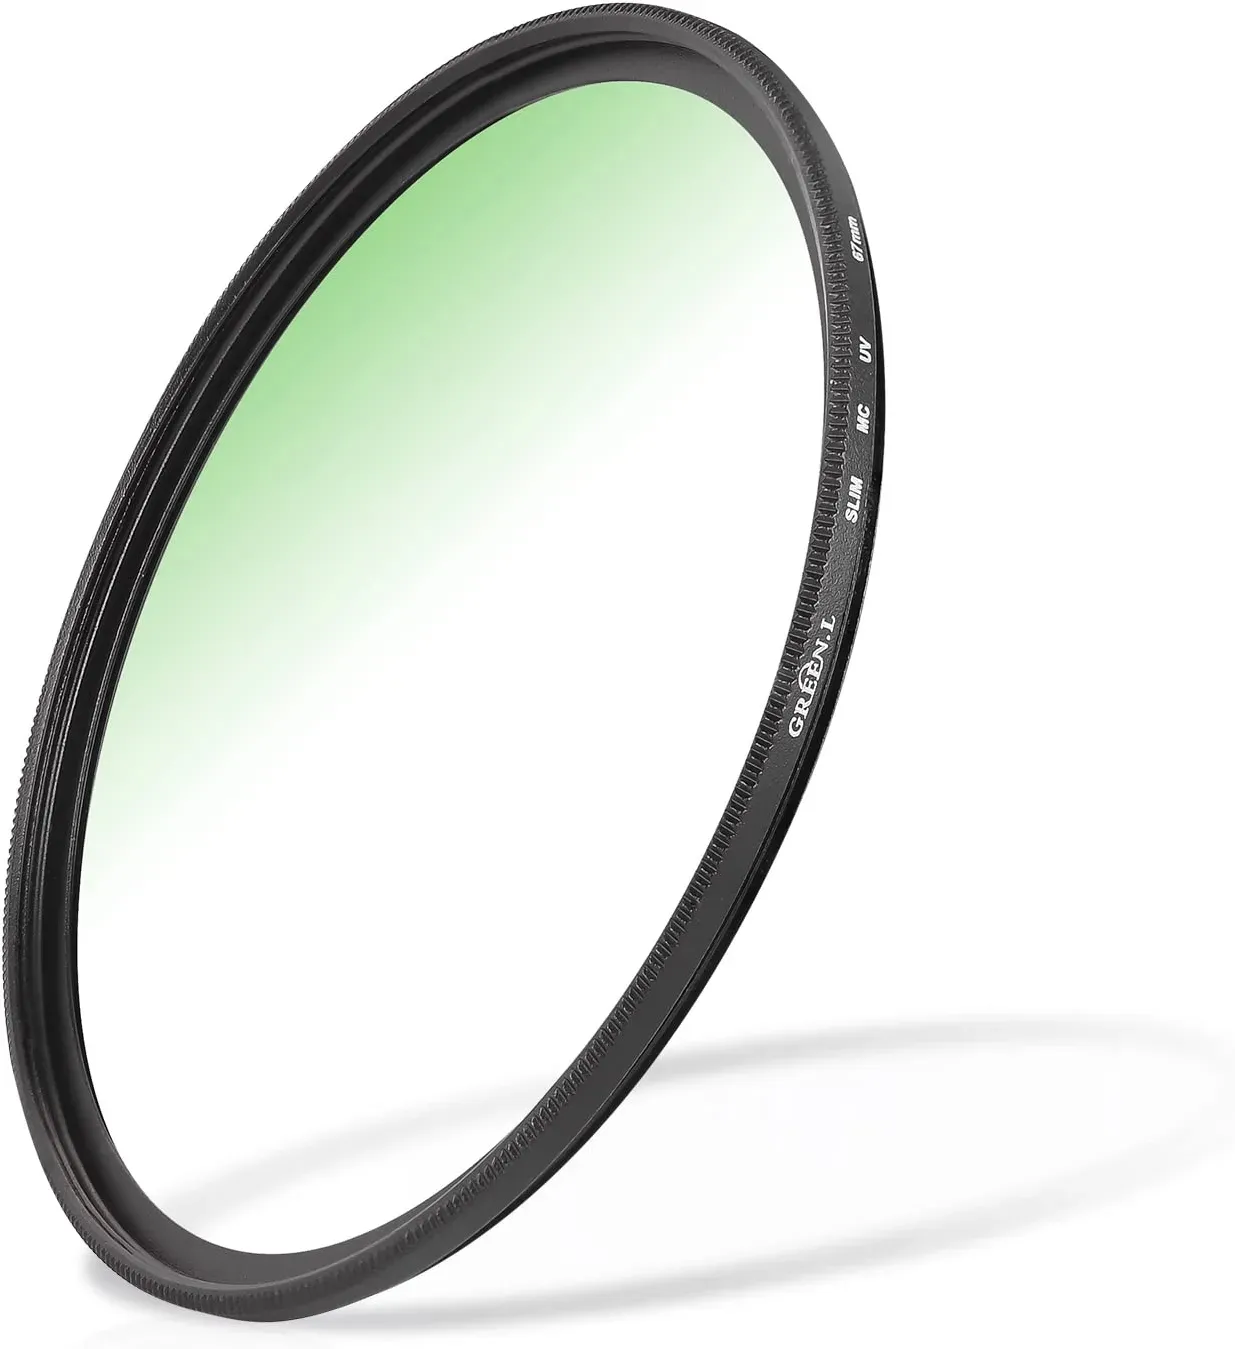 UV Multi Coated Protector Lens Filter, Compatible with Canon, Nikon, Fuji, Sigma, Olympus, Panasonic, Tokina, Tamron